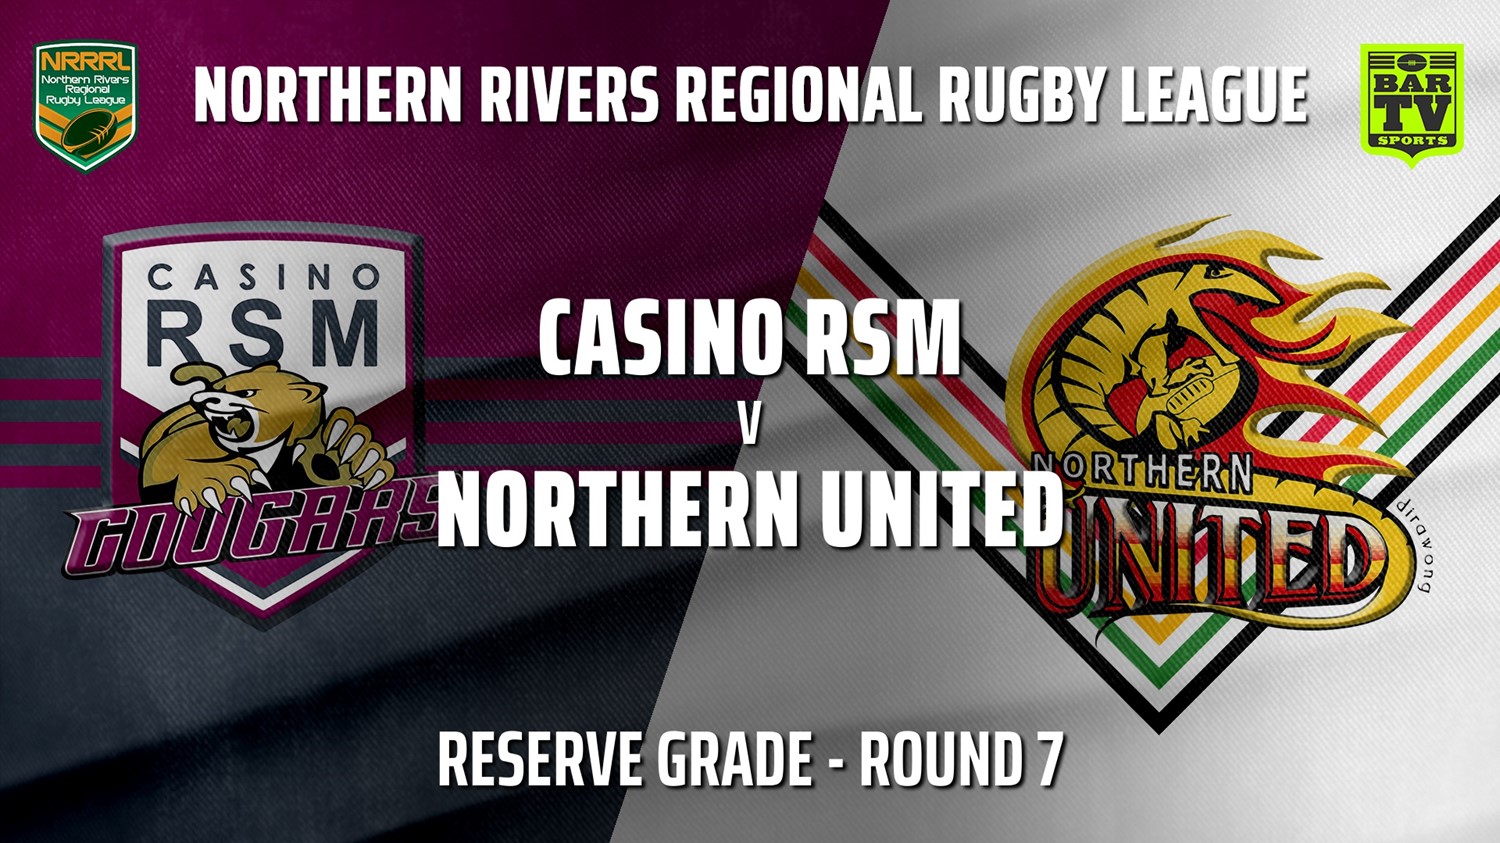 210620-Northern Rivers Round 7 - Reserve Grade - Casino RSM Cougars v Northern United Slate Image